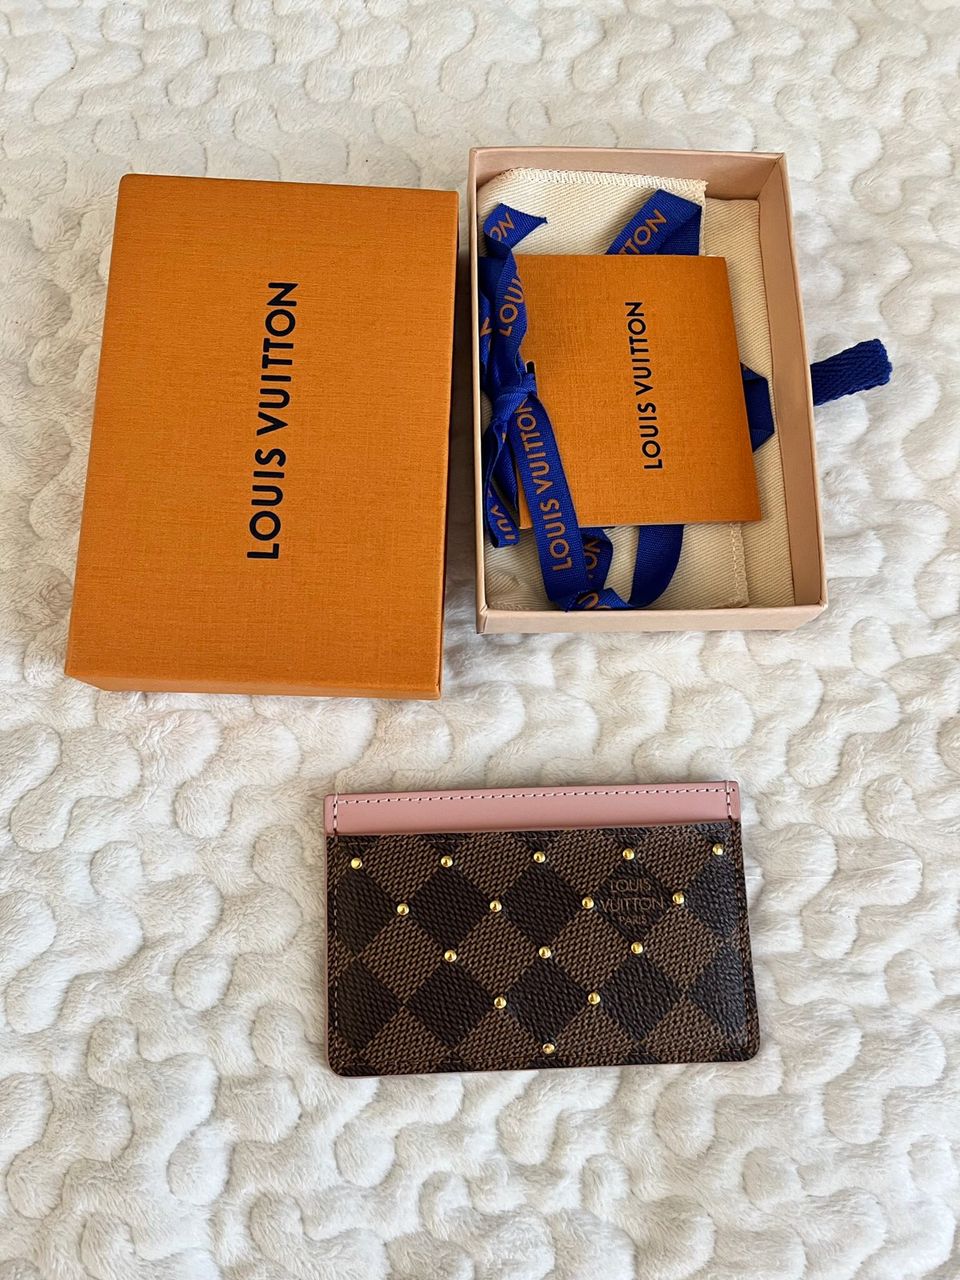 Louis Vuitton card holder